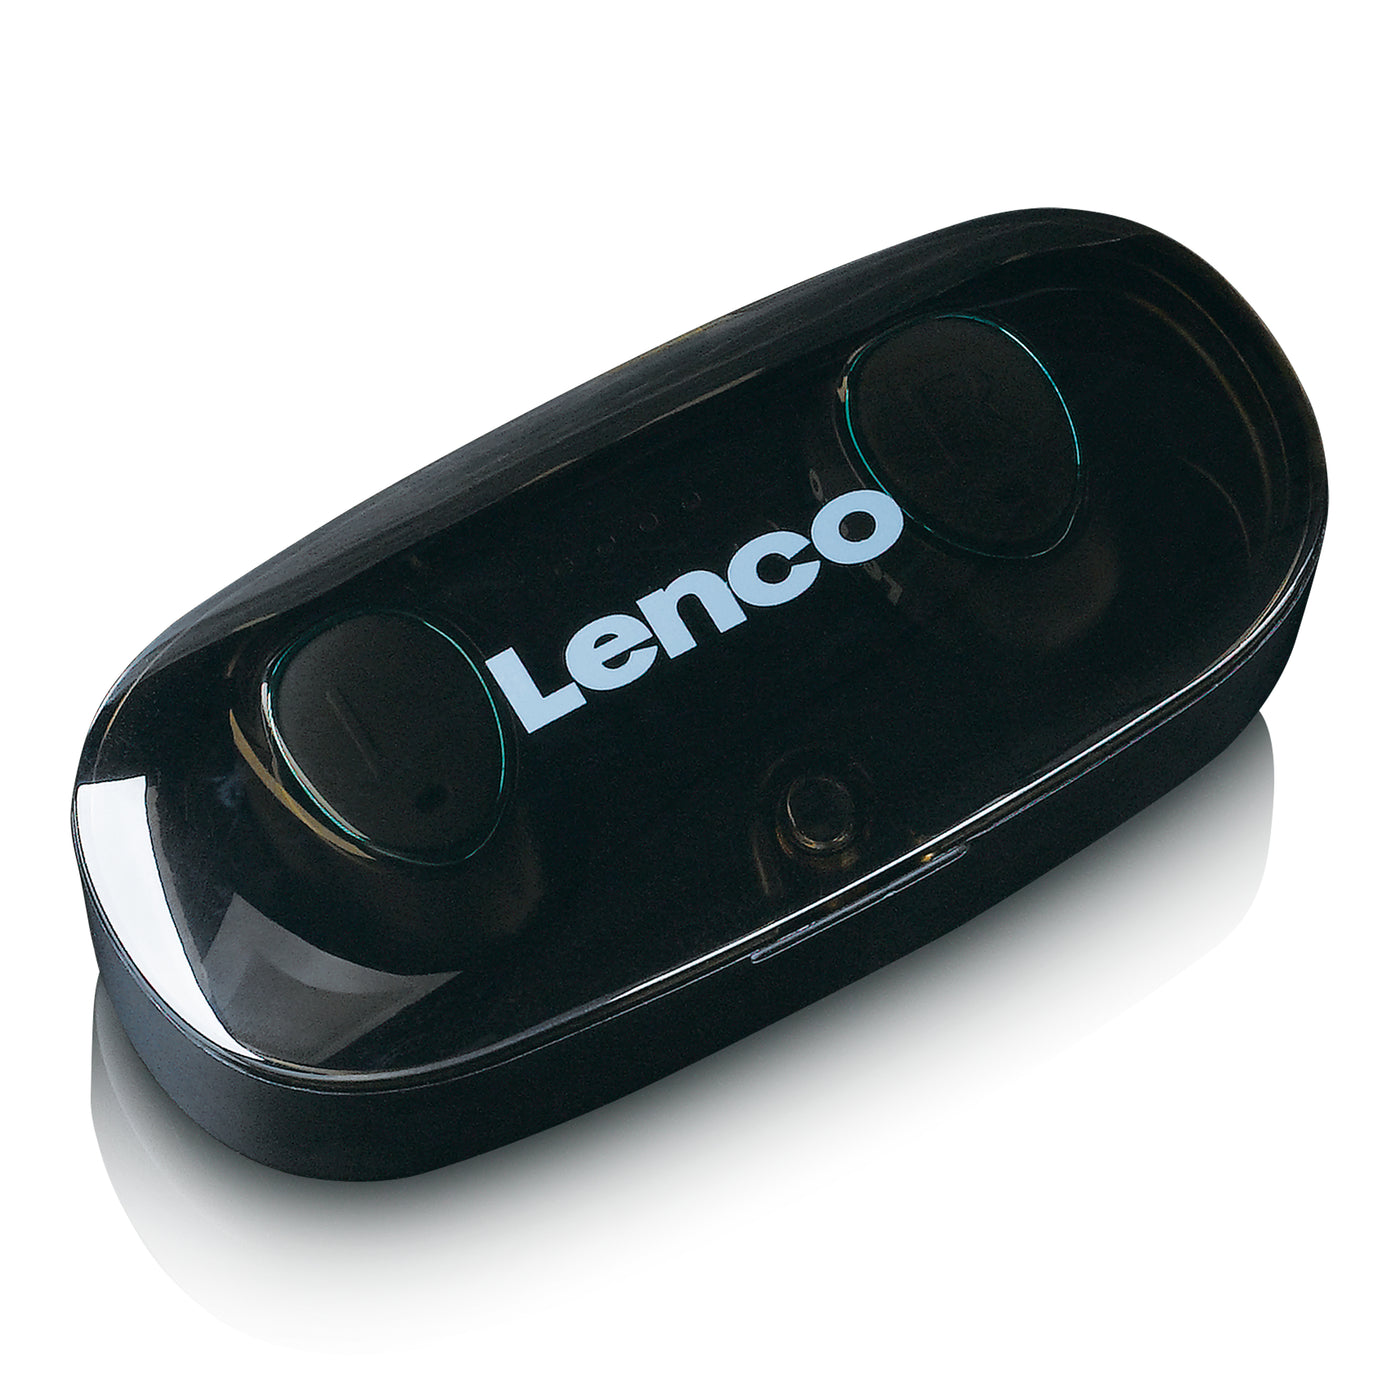 Lenco Lenco.de Lenco – EPB-410BK | Webshop kaufen? im Offizieller Jetzt Webshop offiziellen -